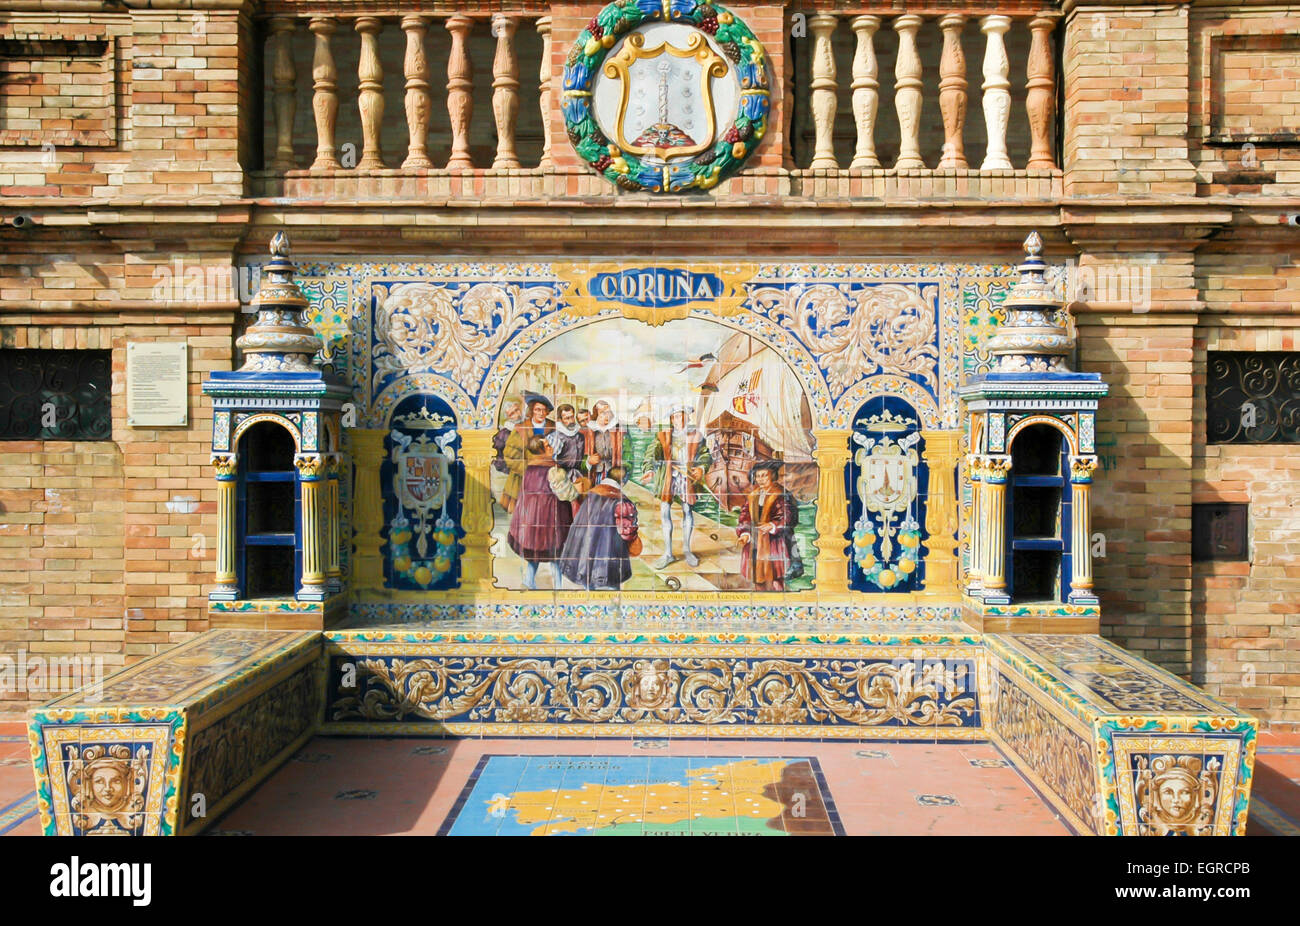 Tiled La Coruna Alcove of the Provinces, Plaza de España, Seville, Spain, Espana Stock Photo